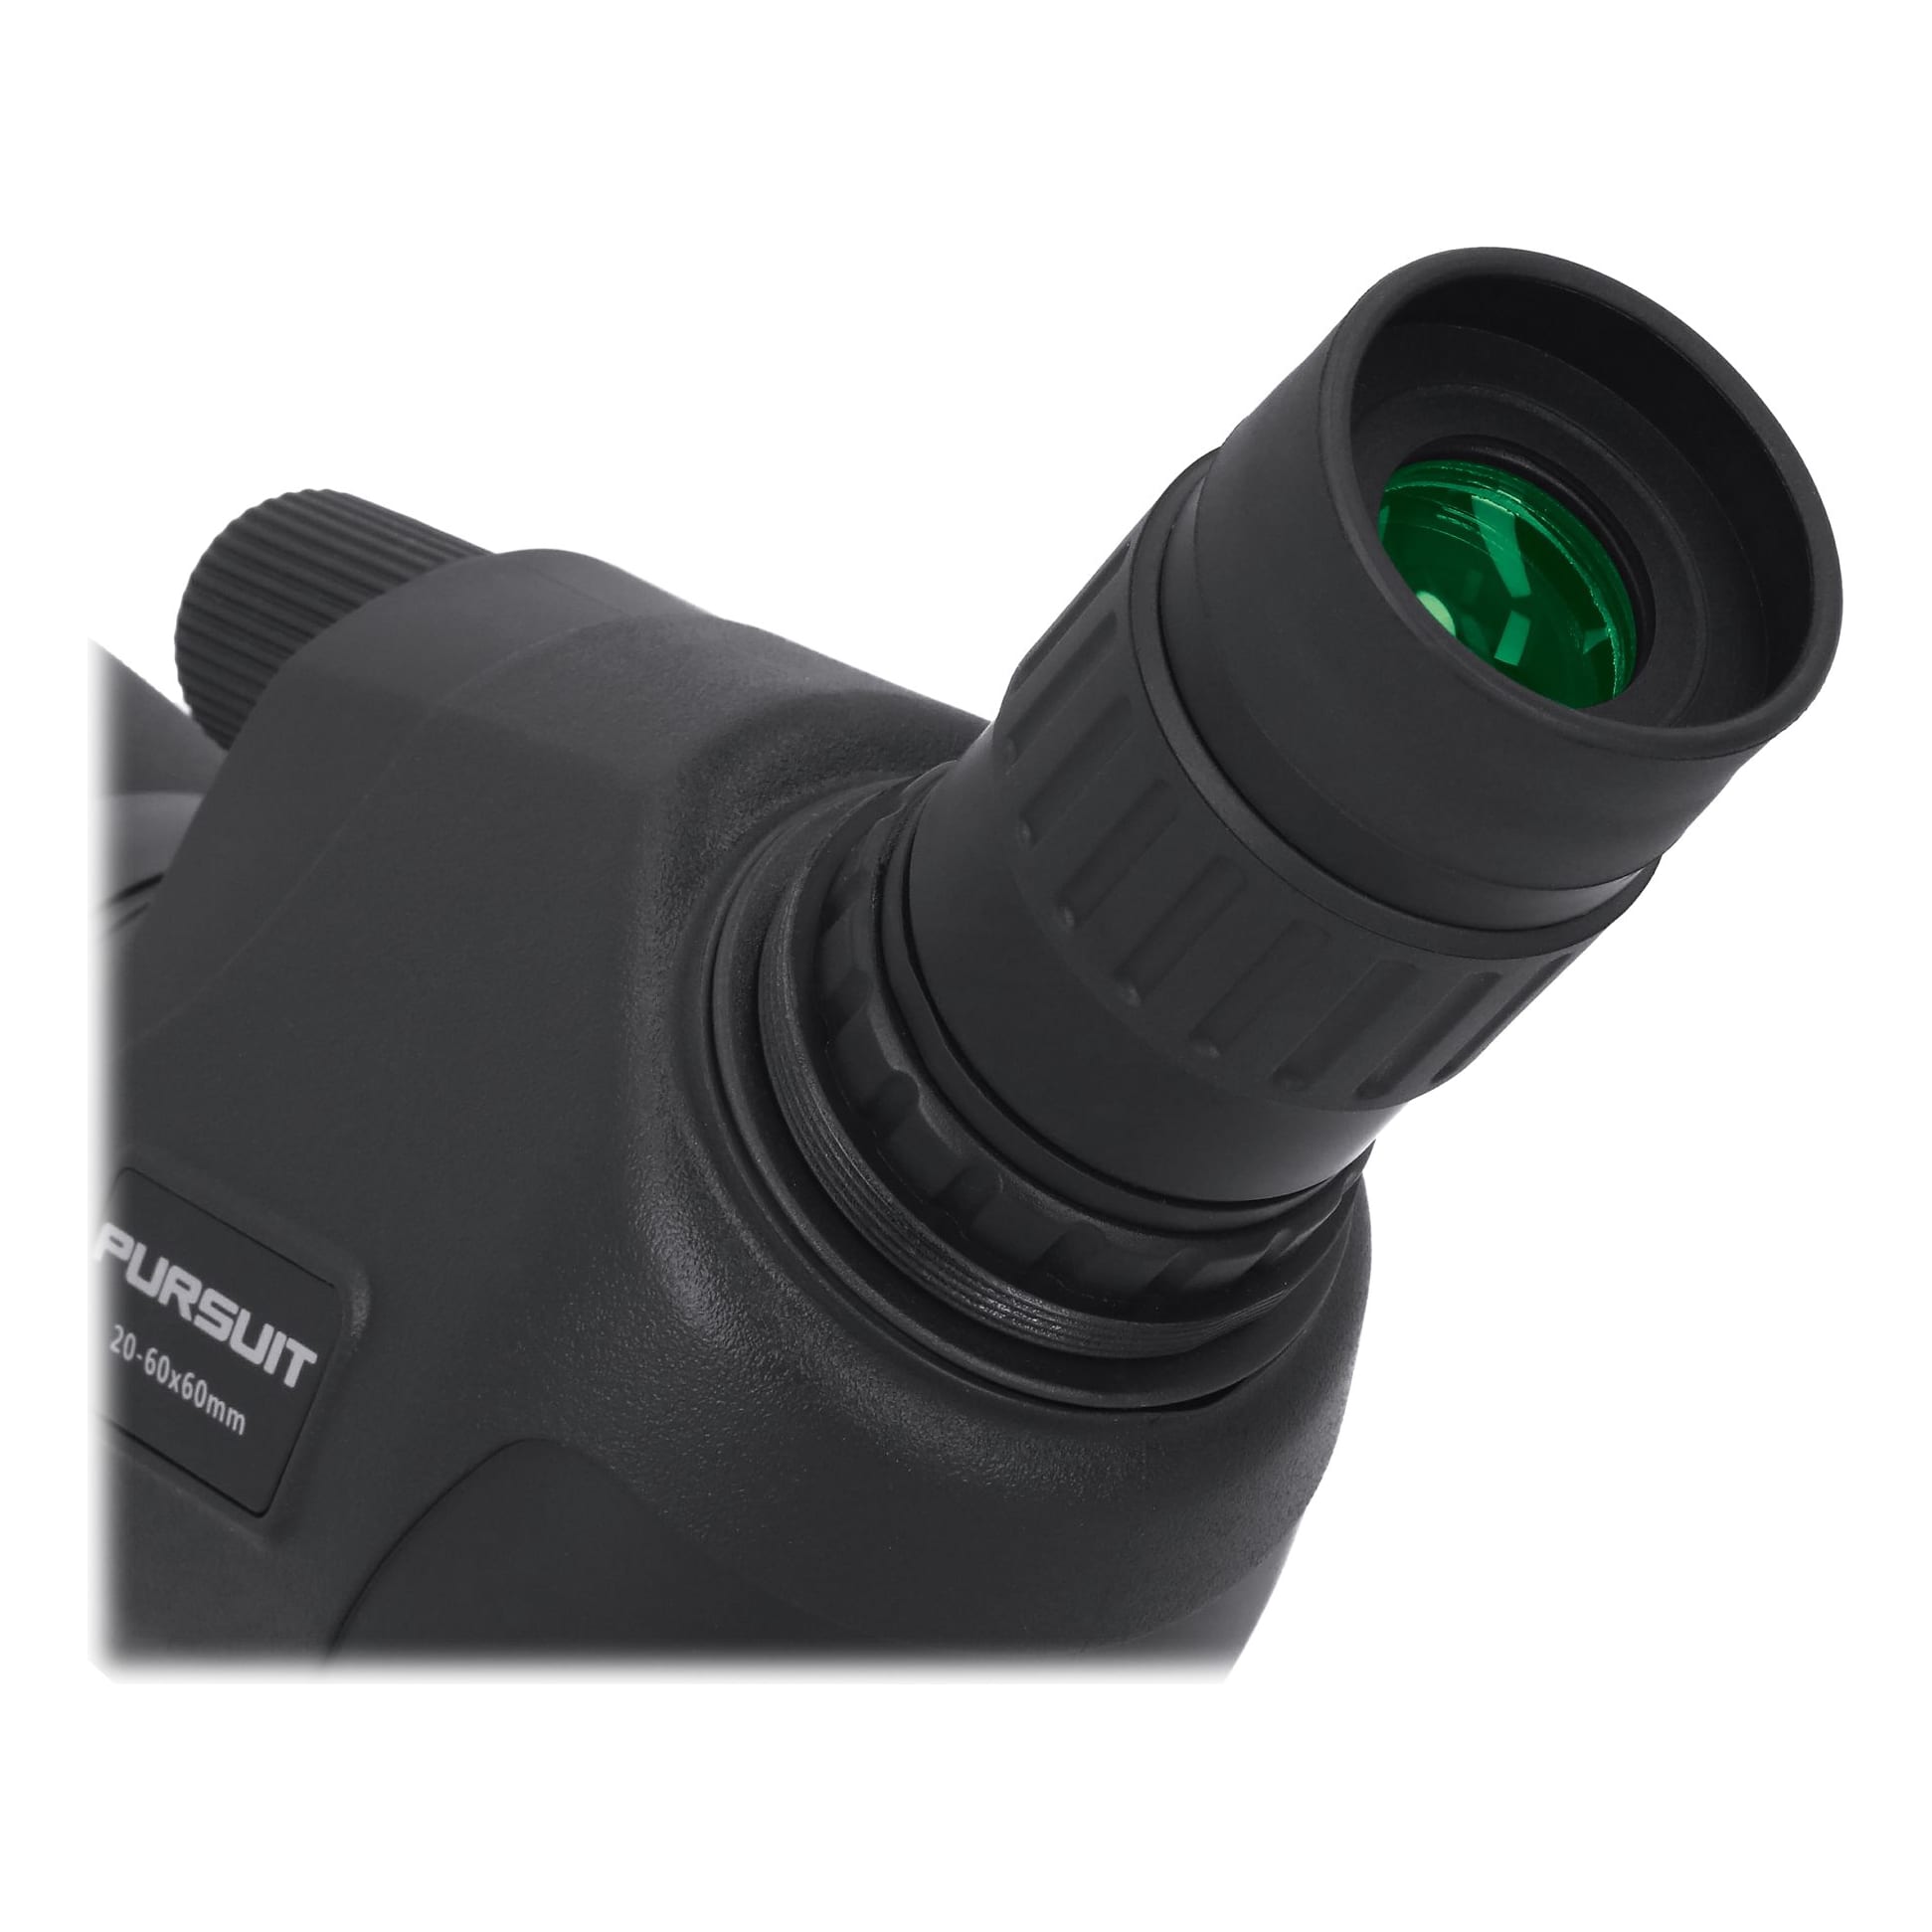 Pursuit® 20-60x60mm Spotting Scope Kit